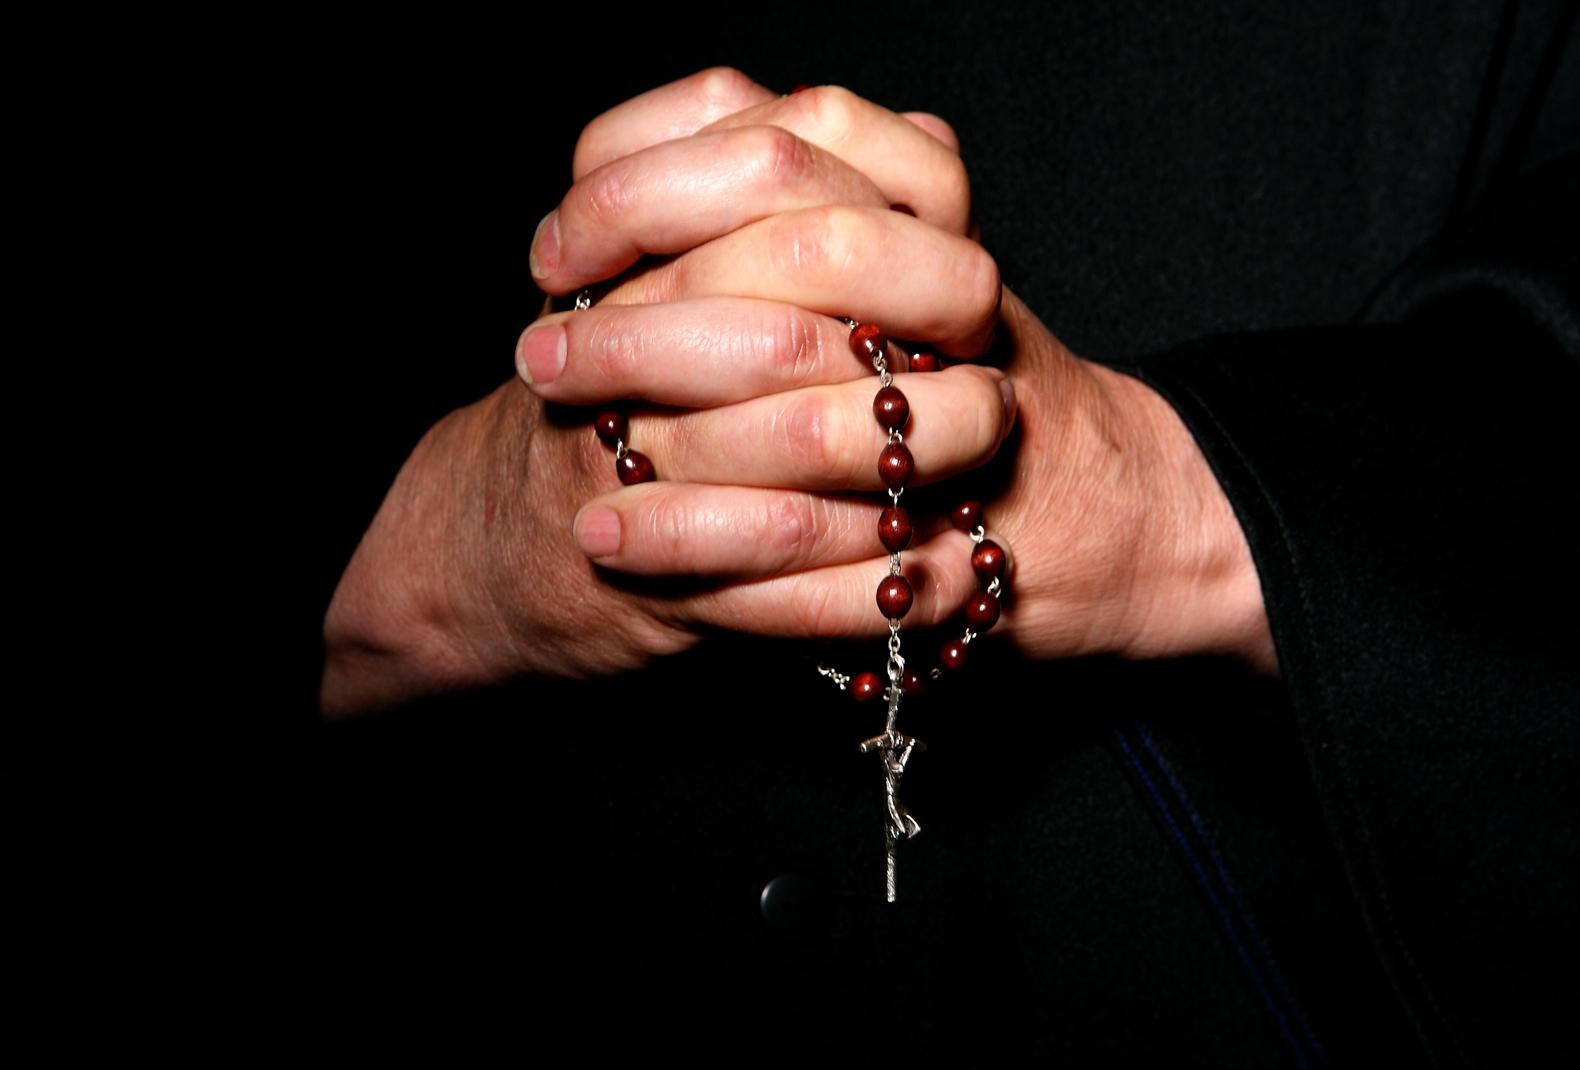 Oud-Katholieke Kerk beschermde daders seksueel misbruik: 'Er is bewust weggekeken'